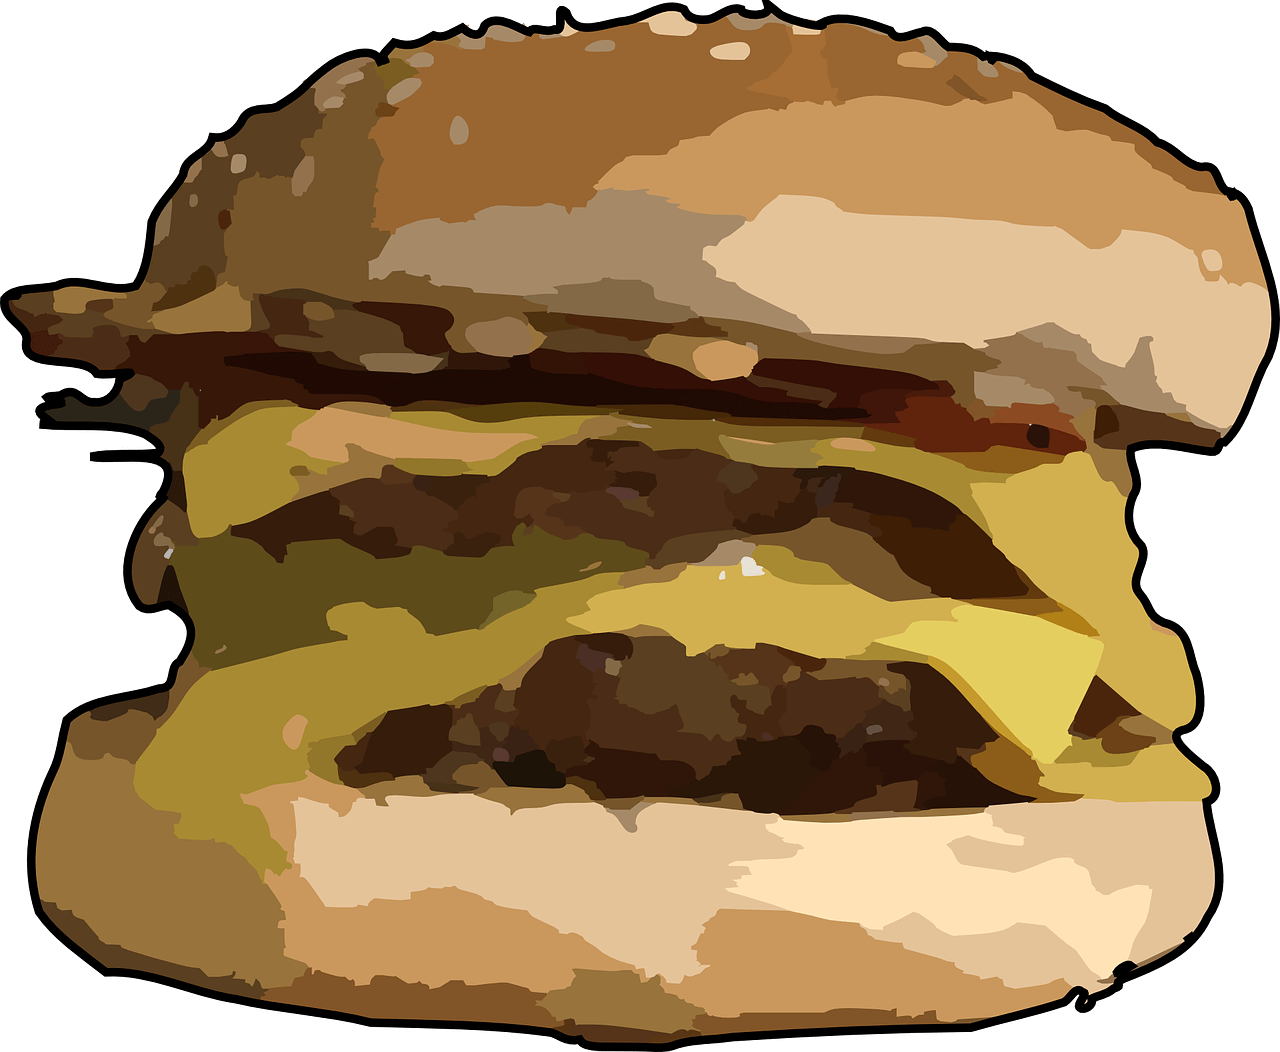 Stylized Big Mac Illustration PNG image